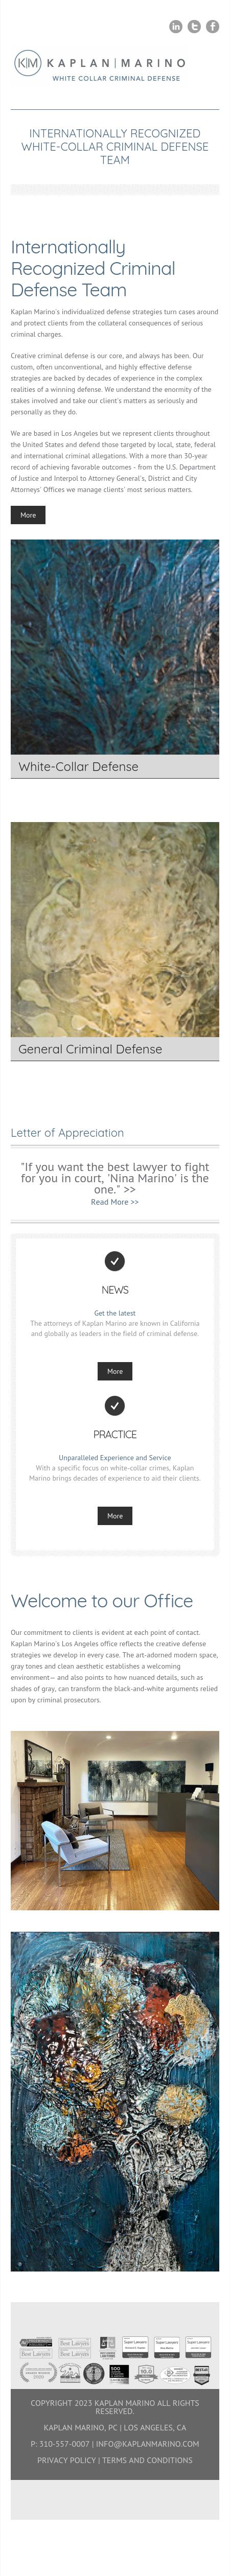 KAPLAN MARINO - Beverly Hills CA Lawyers